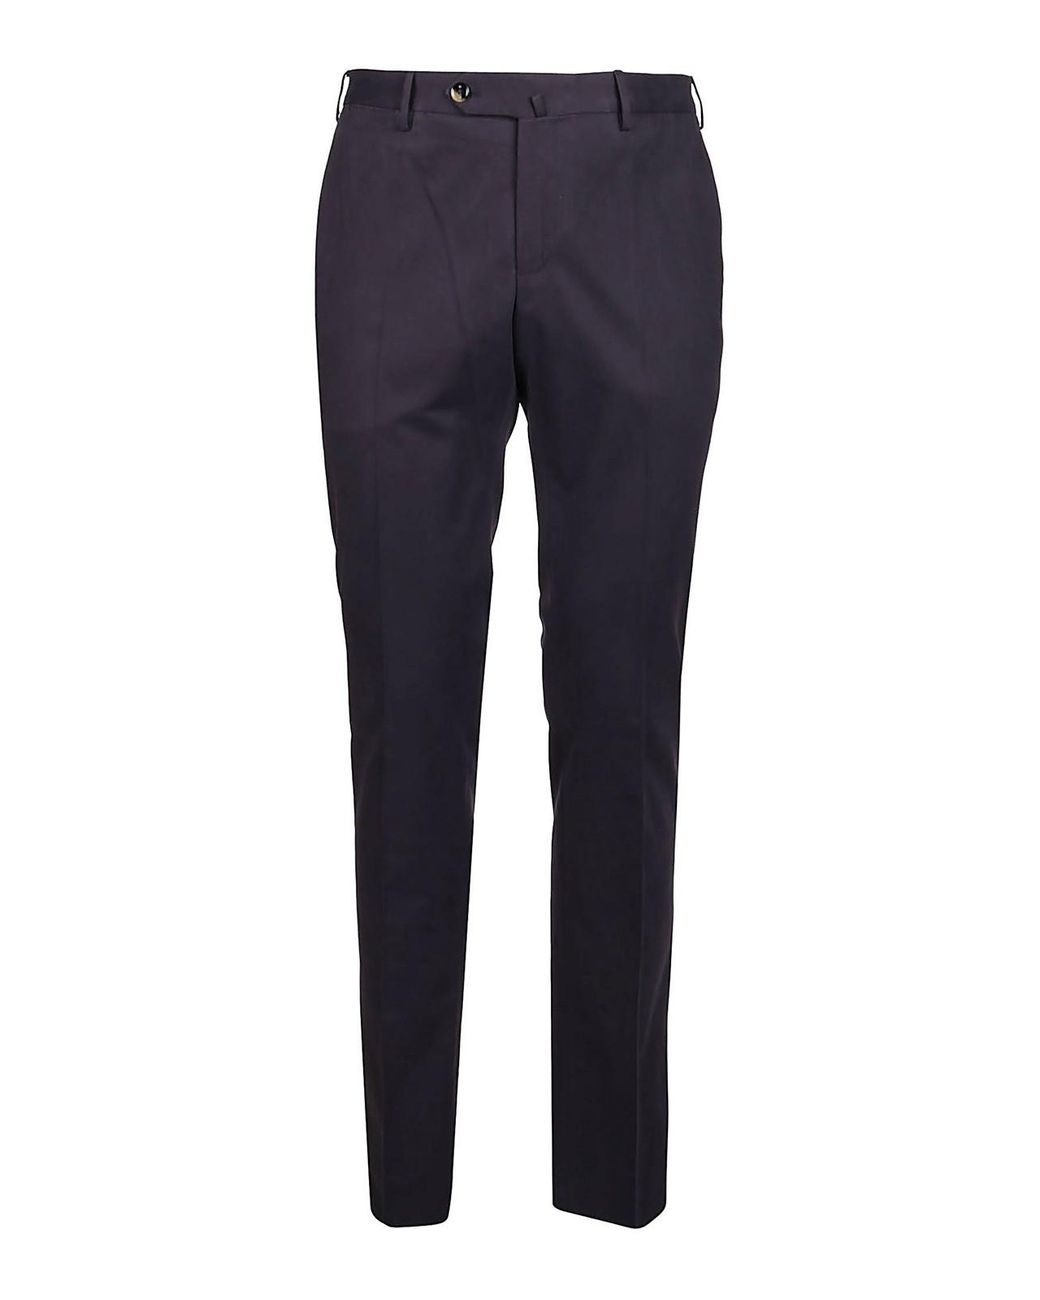 PT Torino Cotton-silk Blend Trousers in Dark Blue (Blue) for Men - Lyst